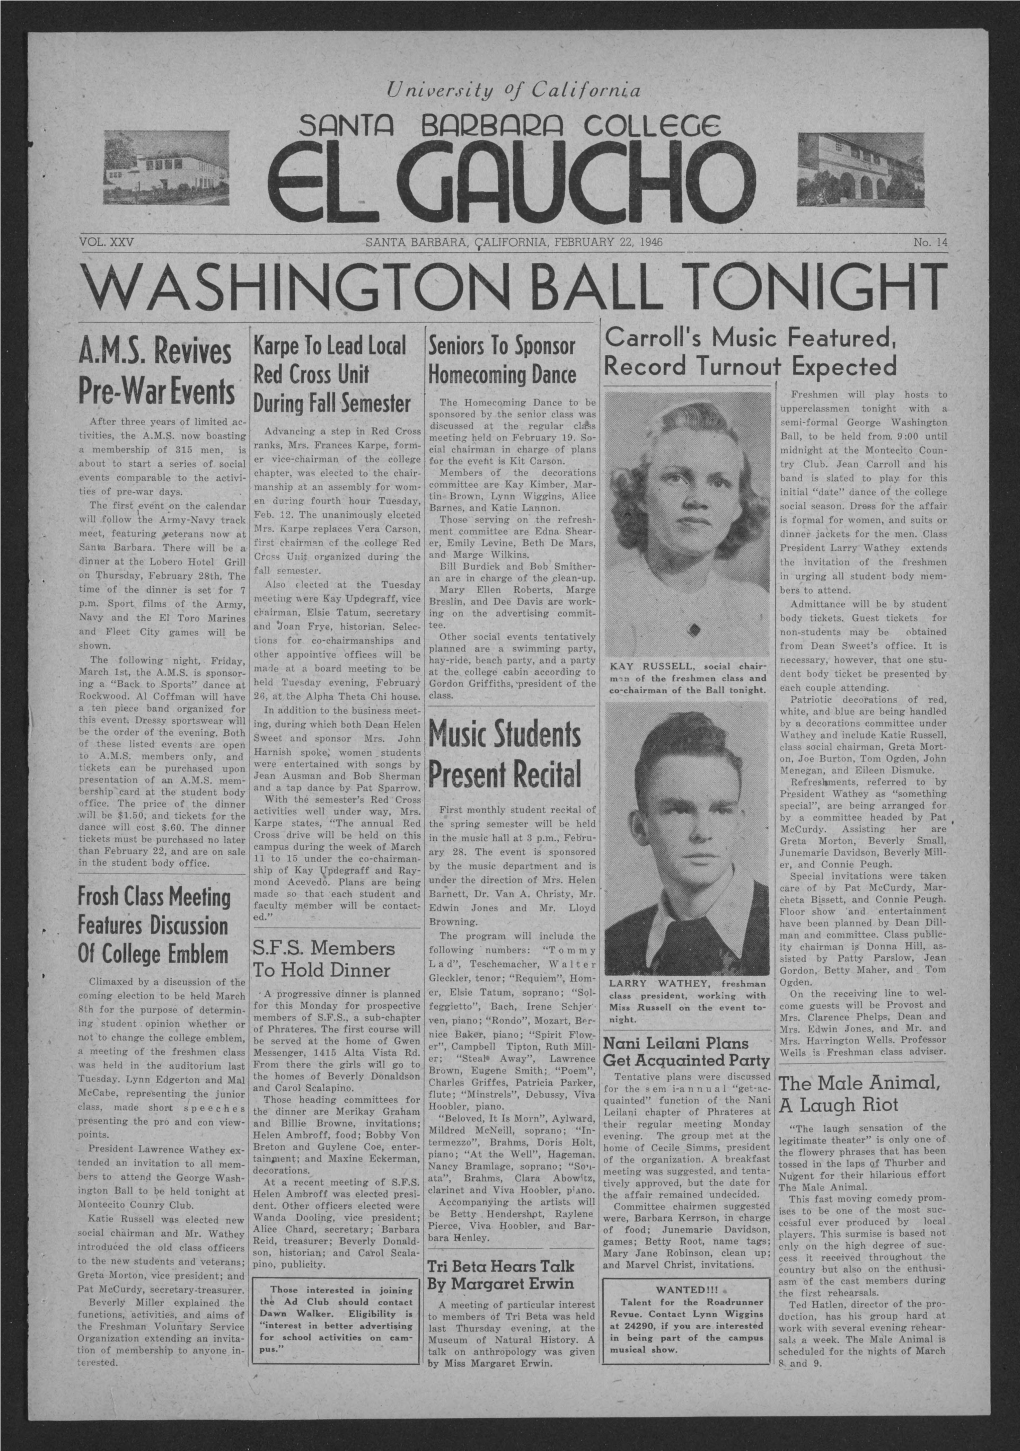 Washington Ball Tonight A.M.S